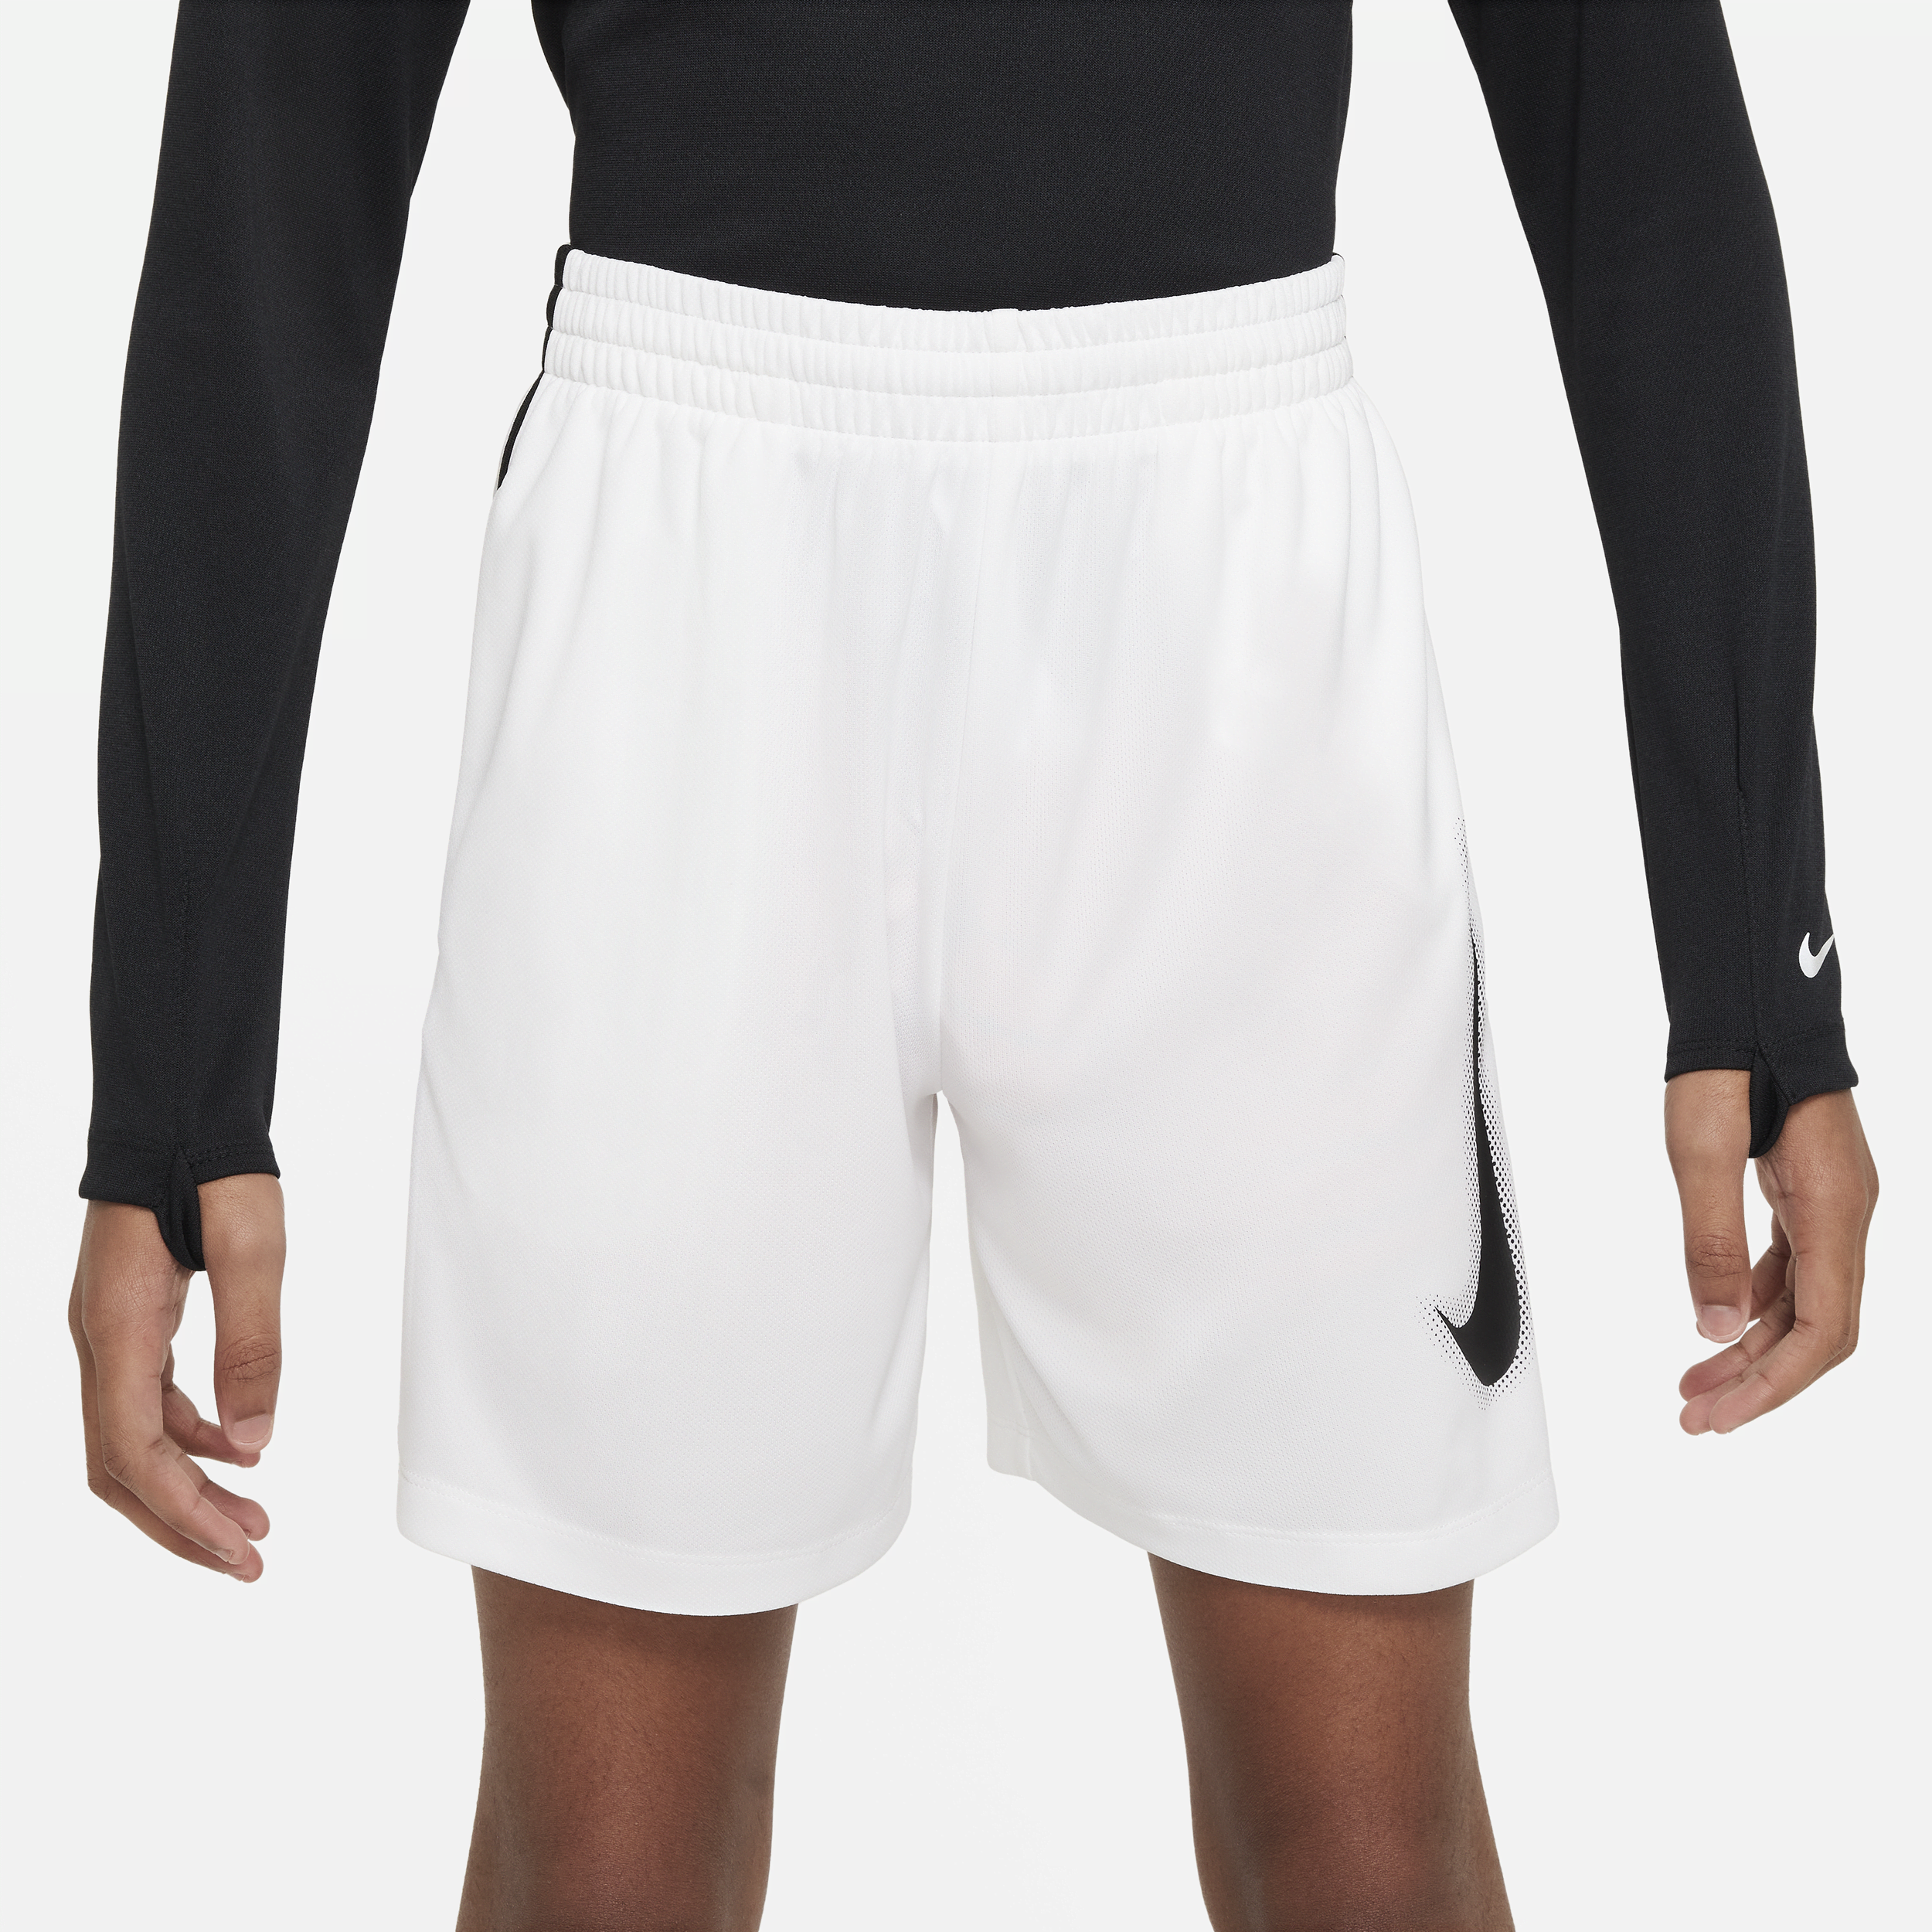 Nike Multi Dri-FIT trainingsshorts met graphic voor jongens Wit